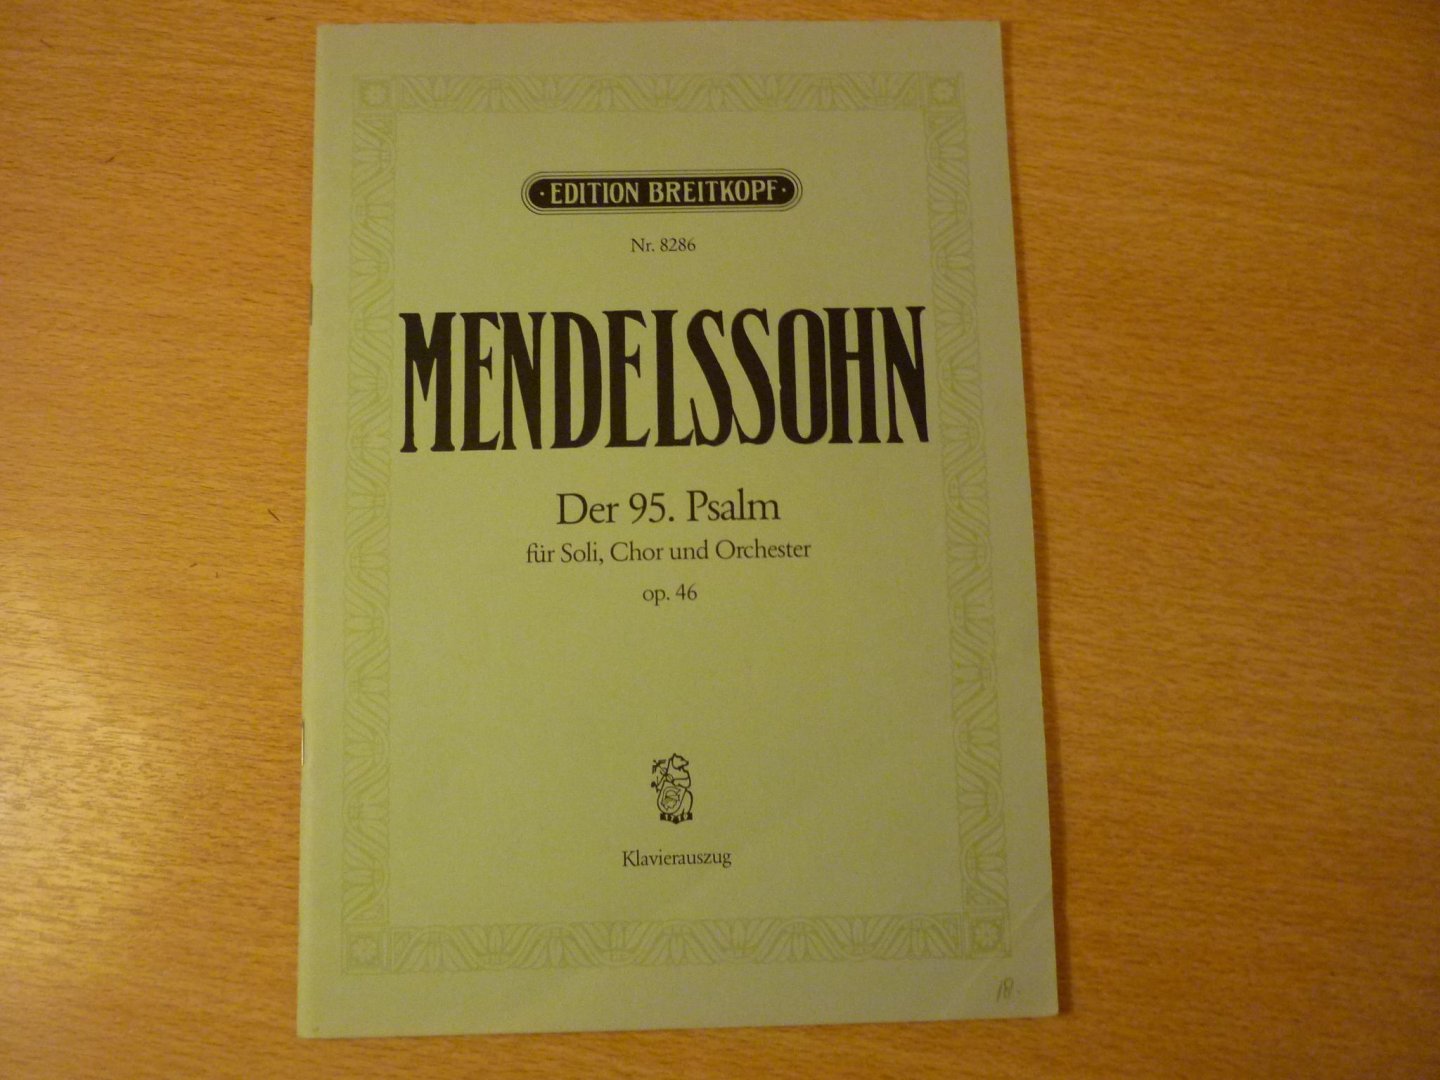 Mendelssohn-Bartholdy, Felix; (1809-1847) - Der 95. Psalm; Psalm 95 Op.46 (MWV A16) Kommt, lasst uns anbeten; Klavierauszug vom Komponisten